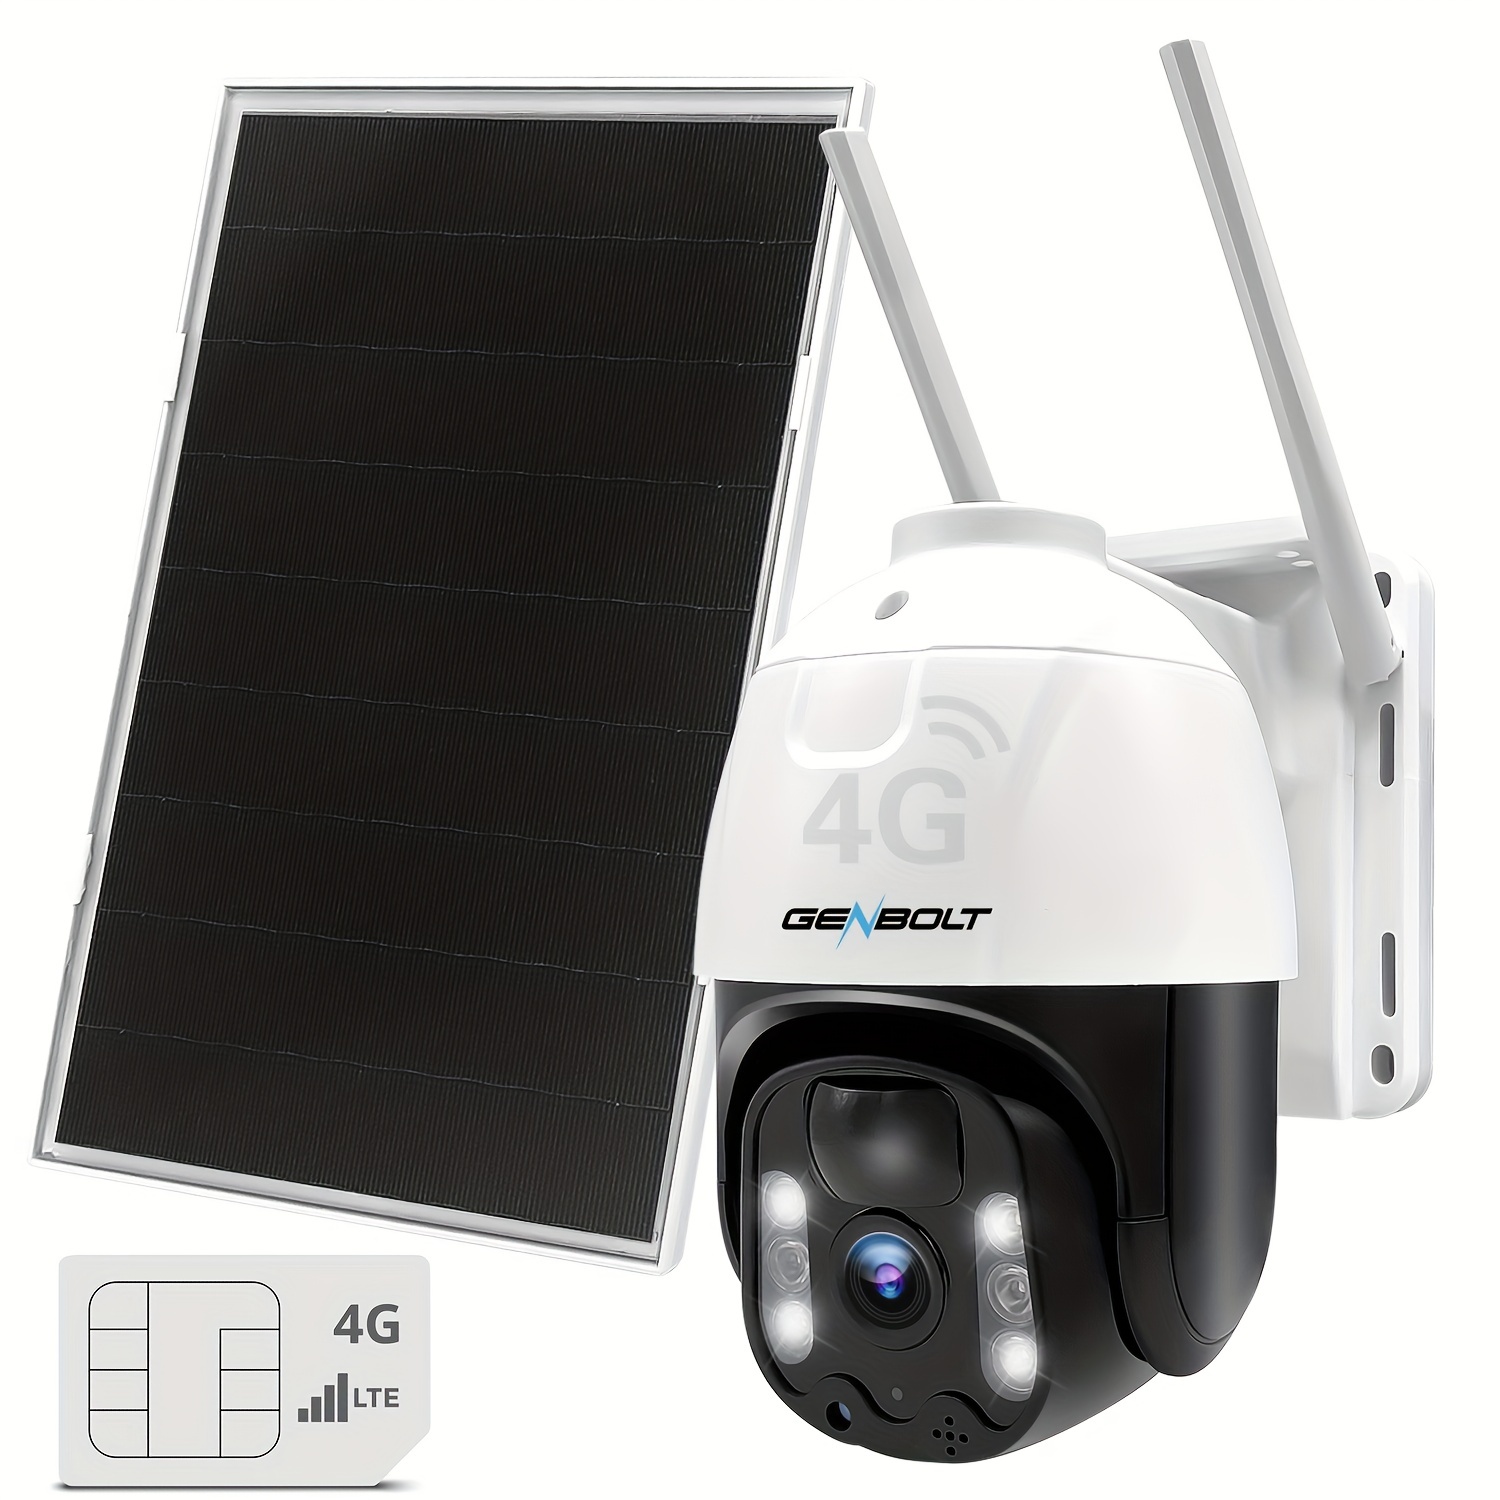 Camara de vigilancia con doble lente 4G/LTE/CHIP – Yupi Solar